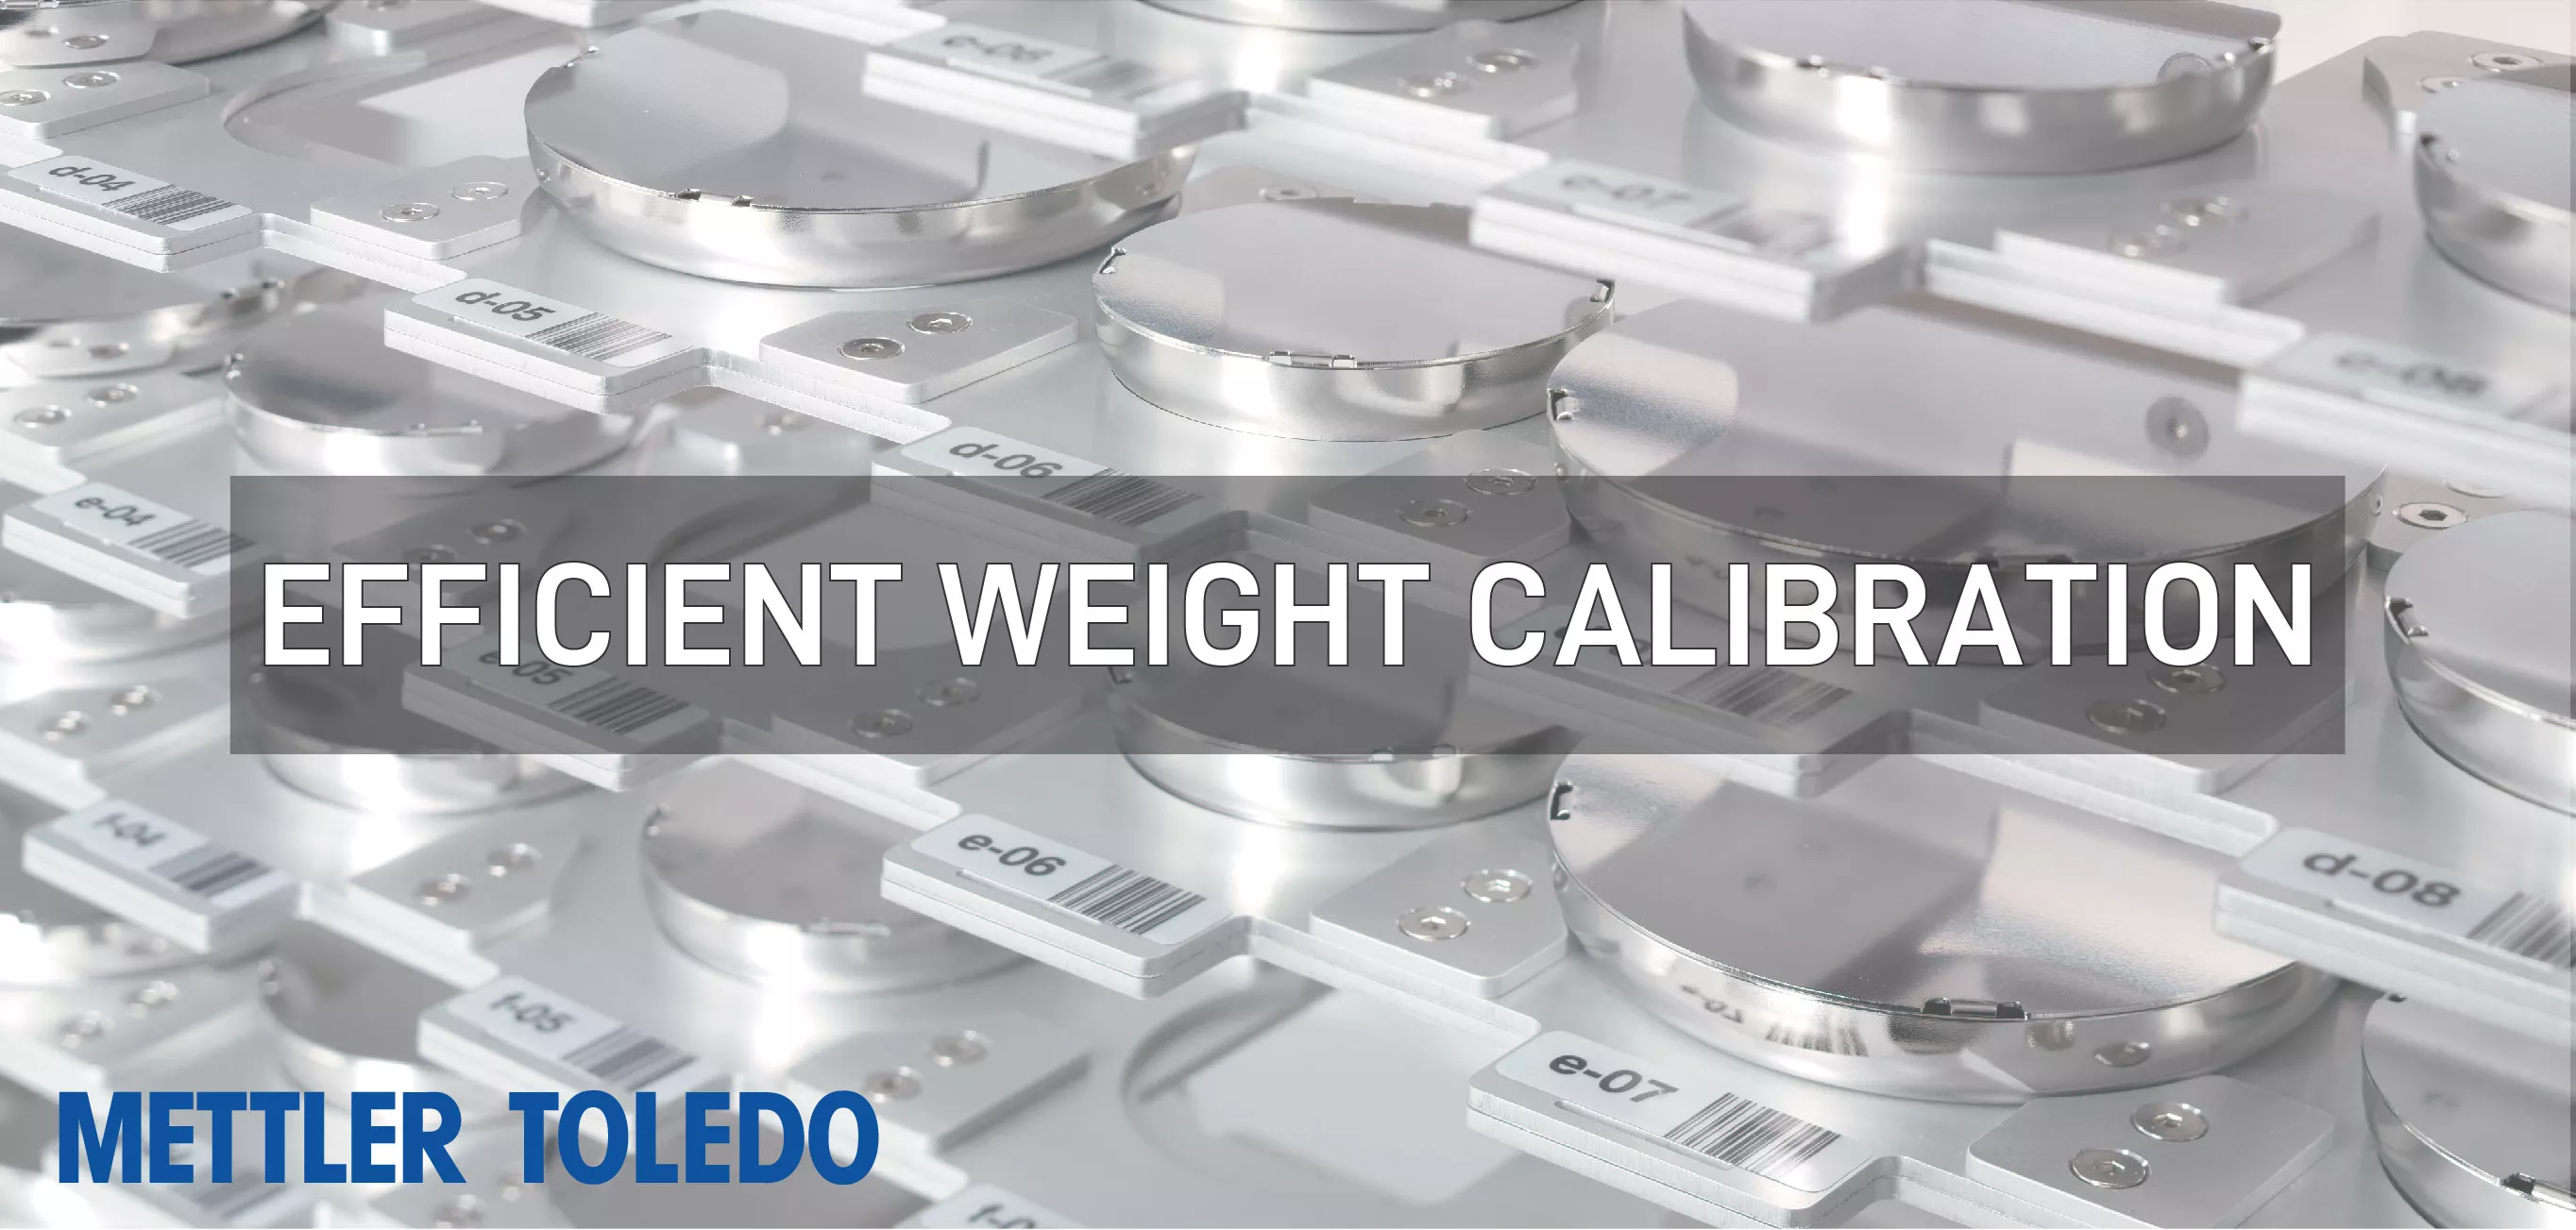 Efficient Weight Calibration by METTLER TOLEDO Webinar